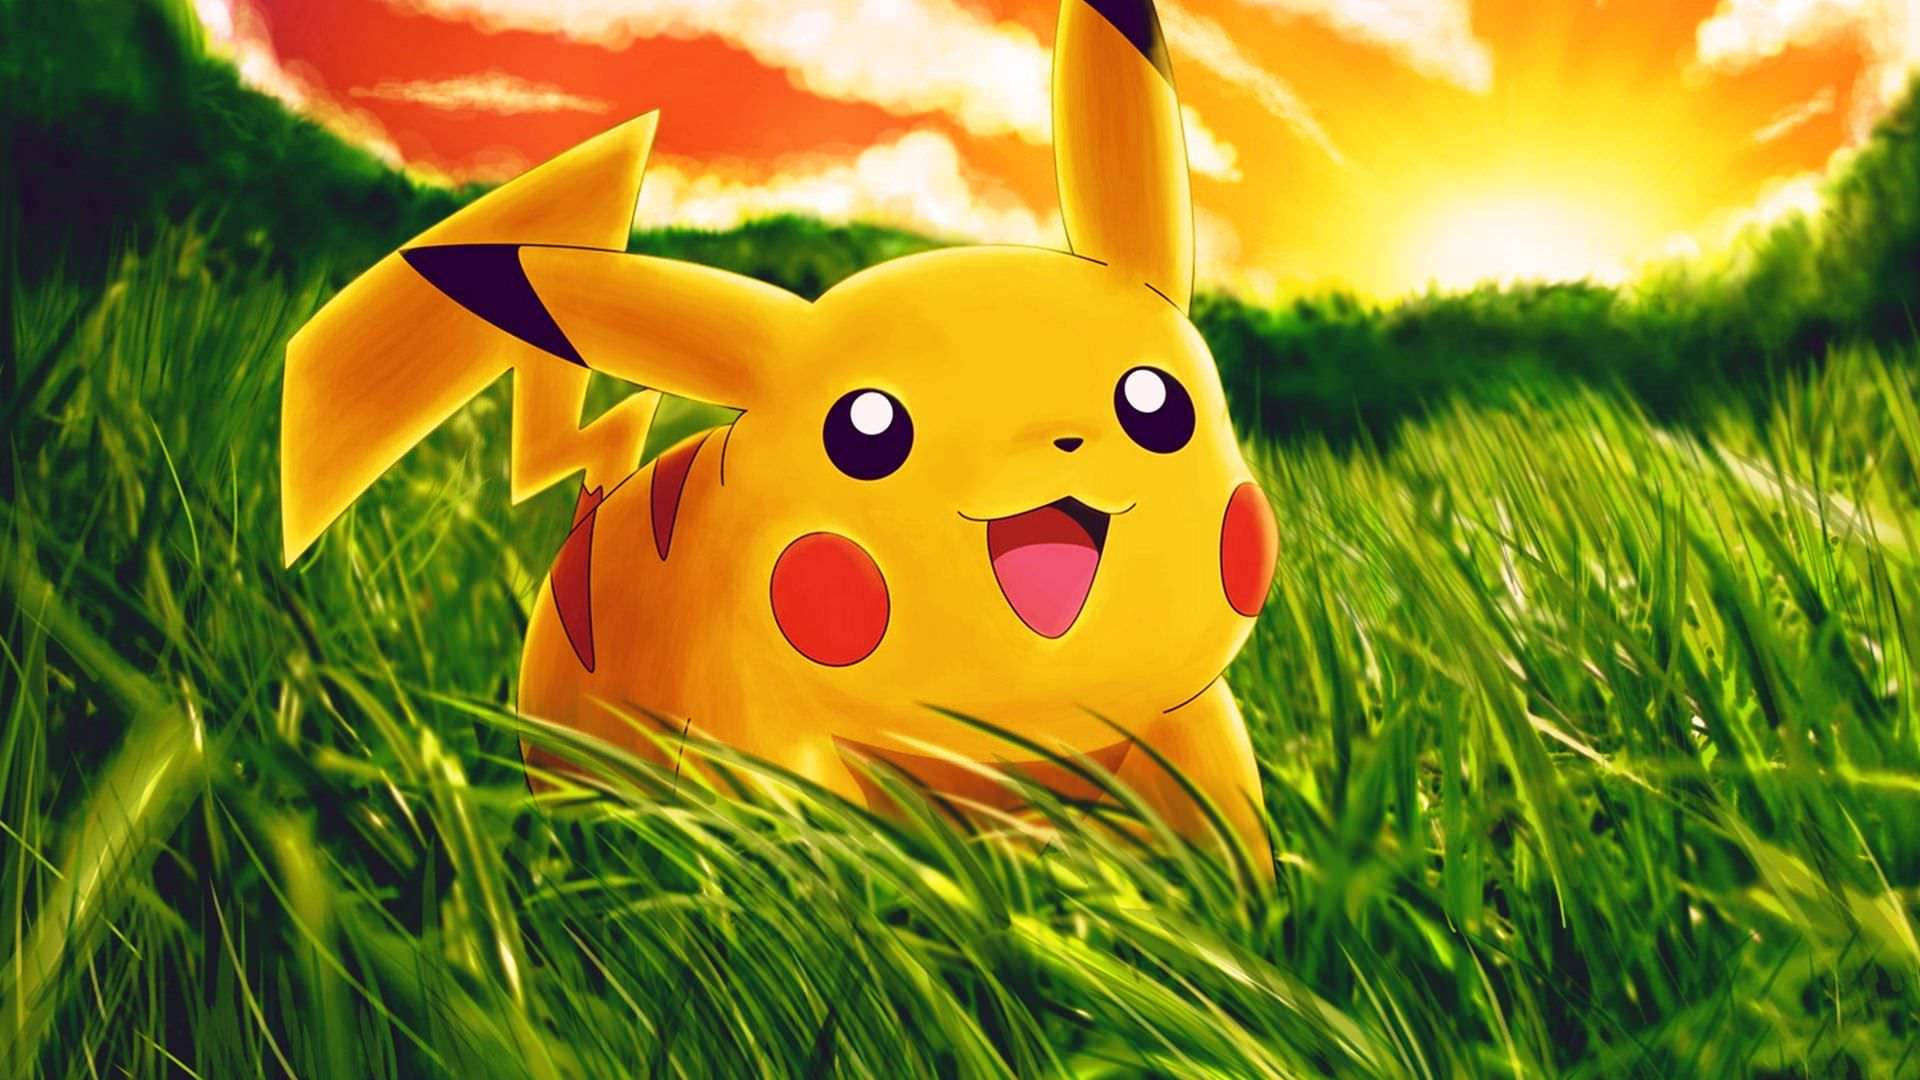 Top 999+ Pikachu Wallpaper Full HD, 4K✅Free to Use